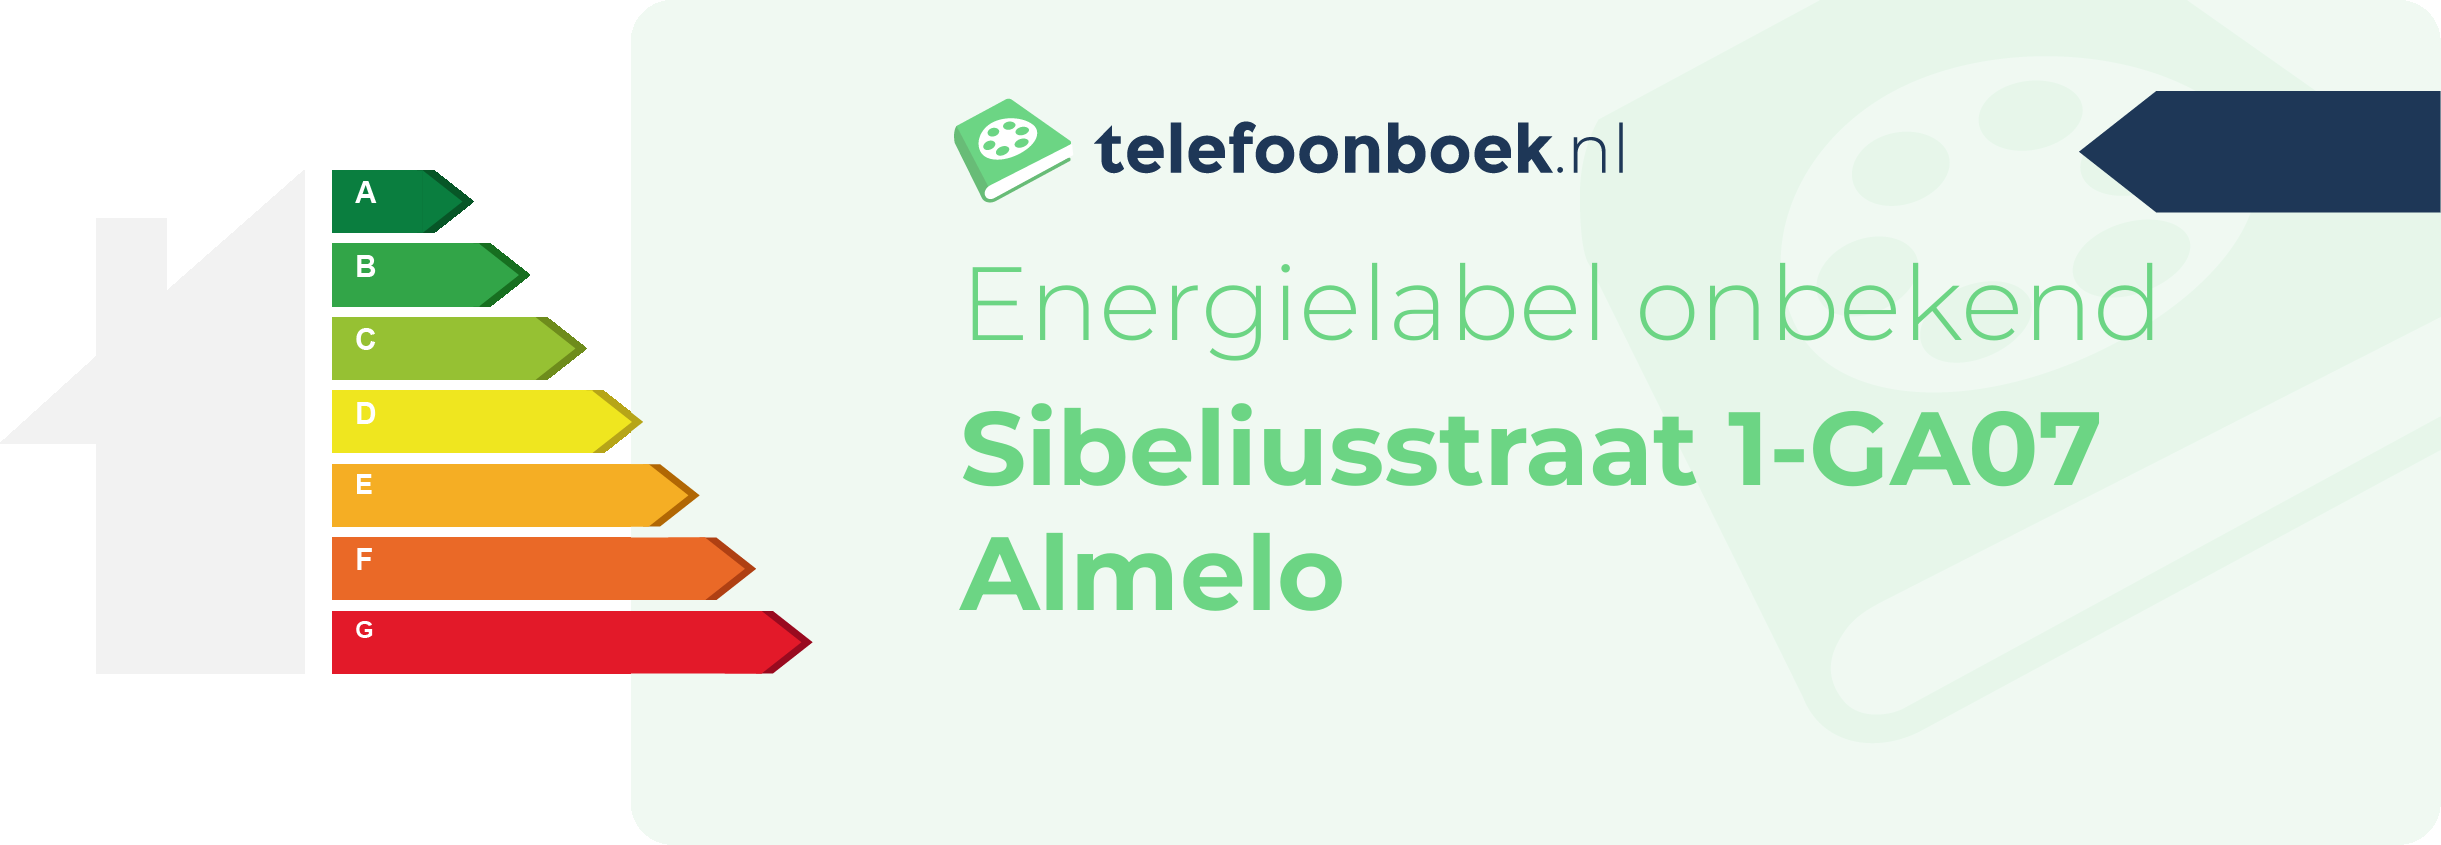 Energielabel Sibeliusstraat 1-GA07 Almelo